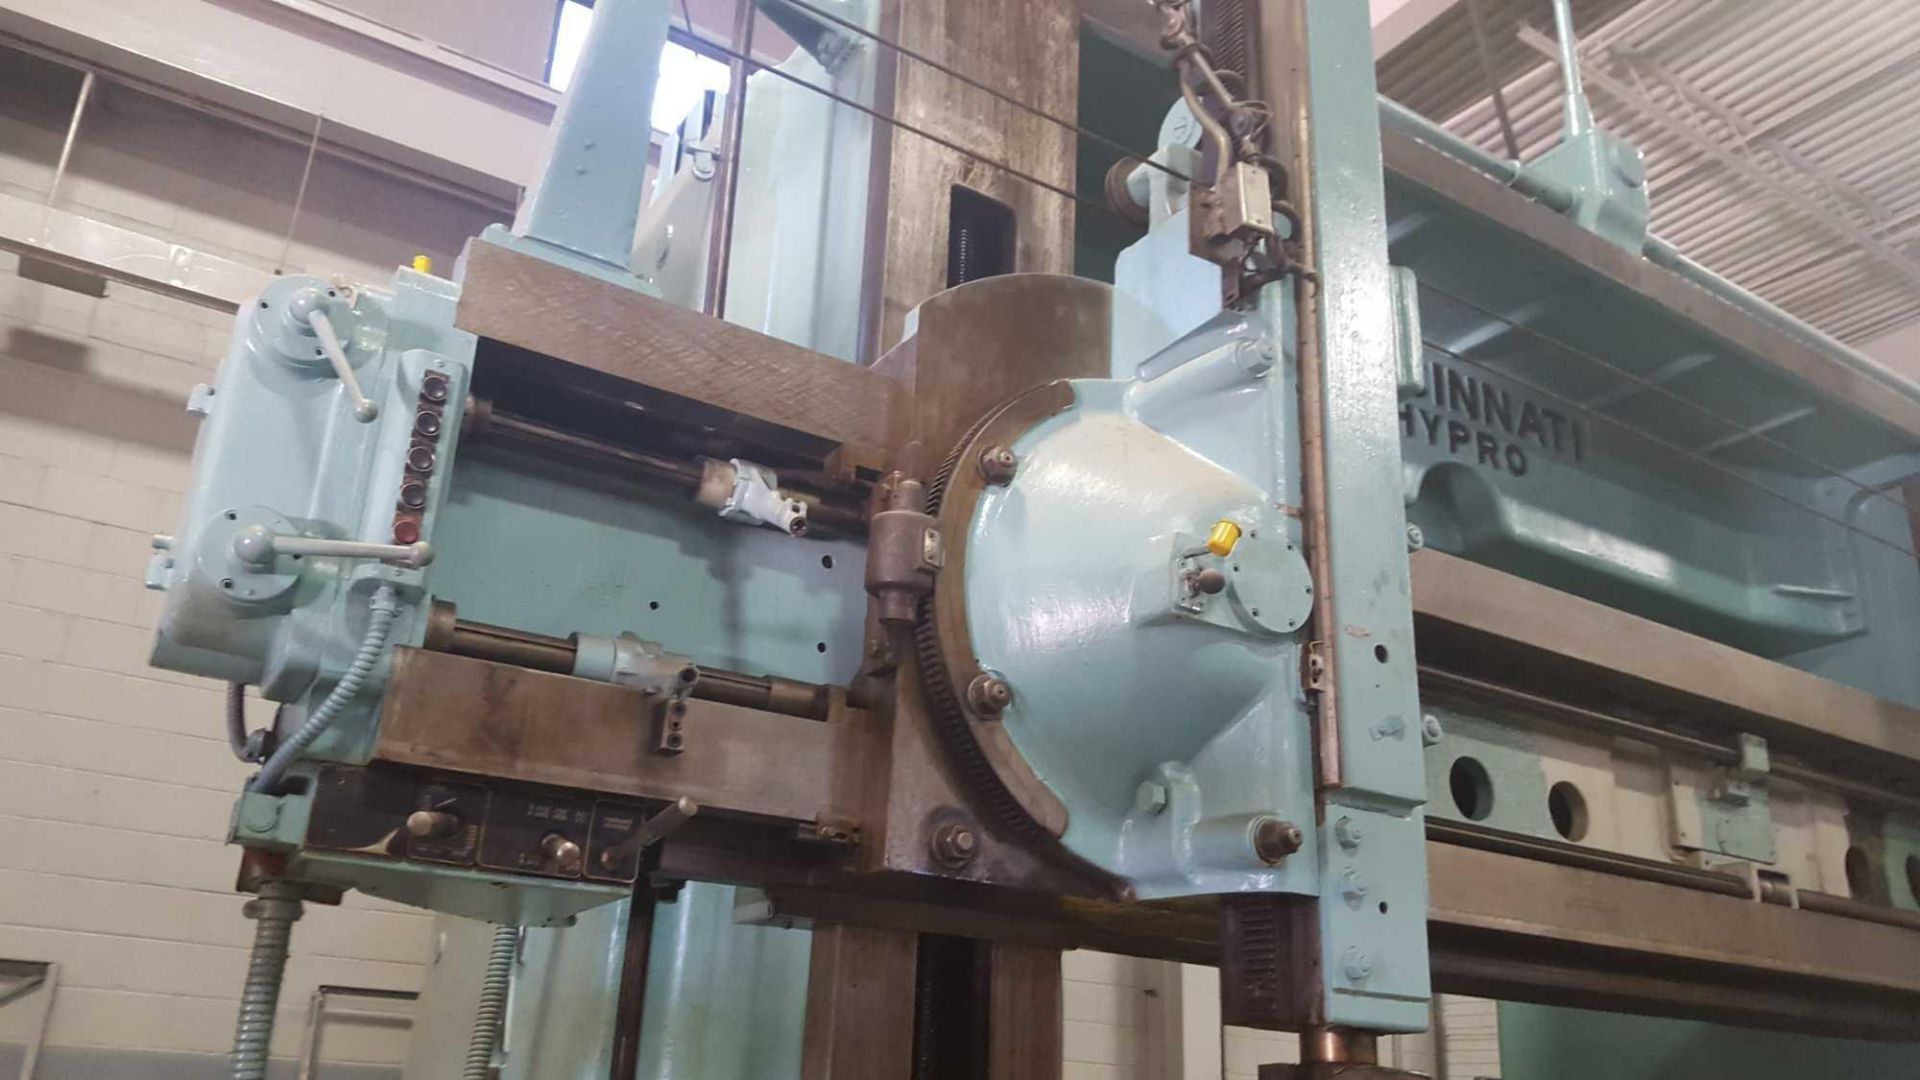 Cincinnati Hypro Vertical Boring mill, 144" diameter table, 150" swing, 150 hp, dimensions: 25' wide - Image 8 of 9